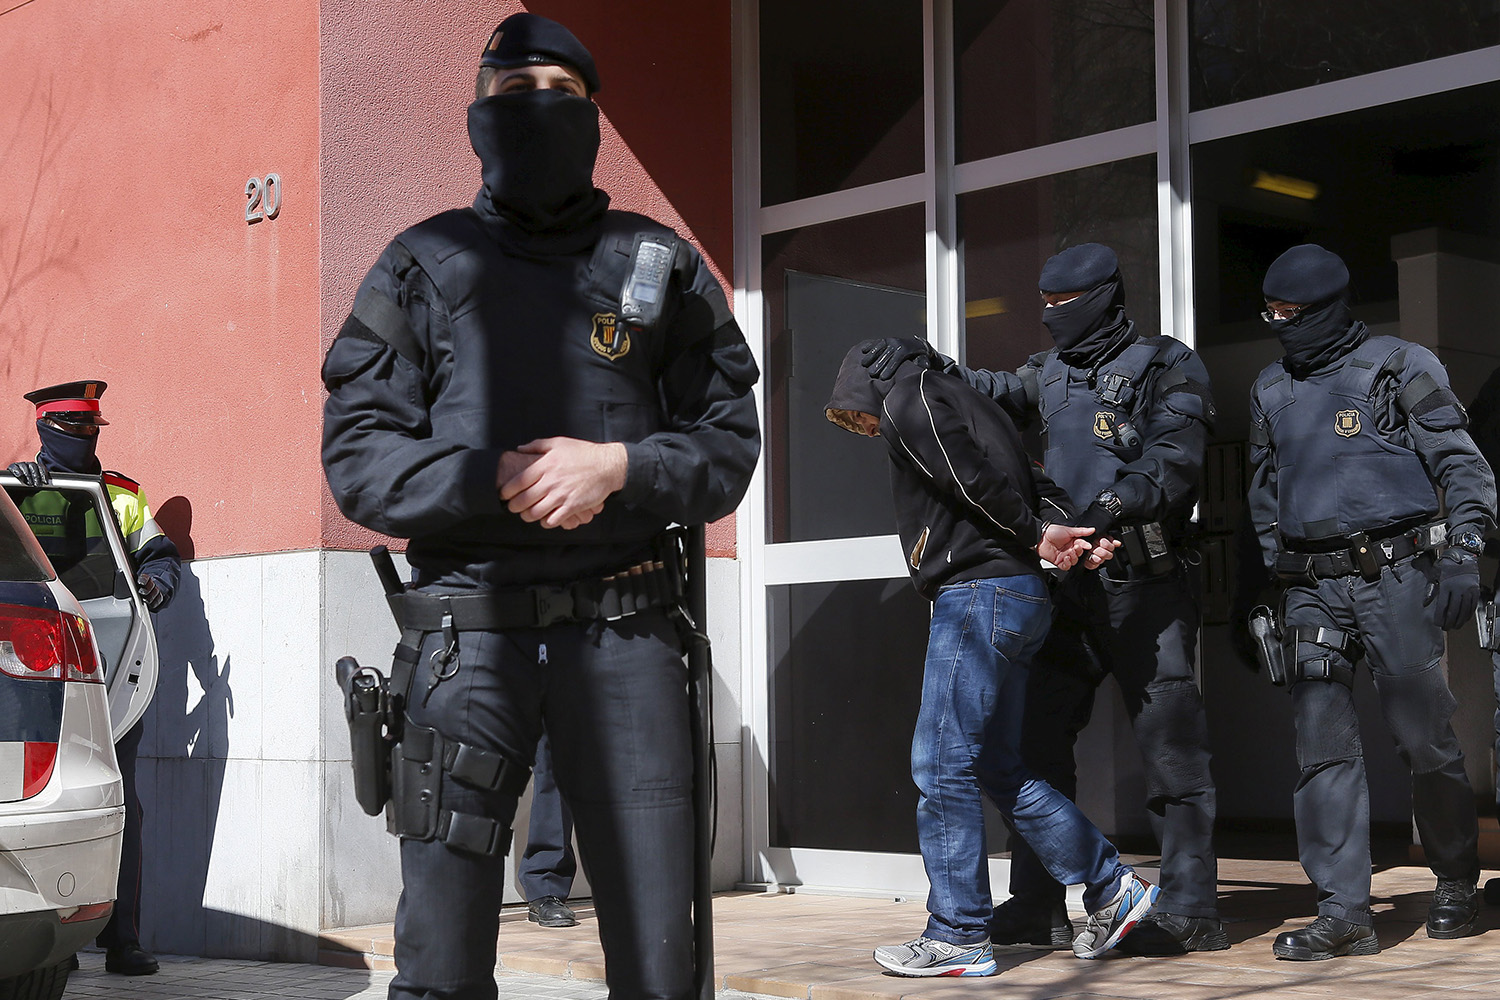 Yihadistas detenidos planeaban atentar contra lugares emblemáticos de Cataluña